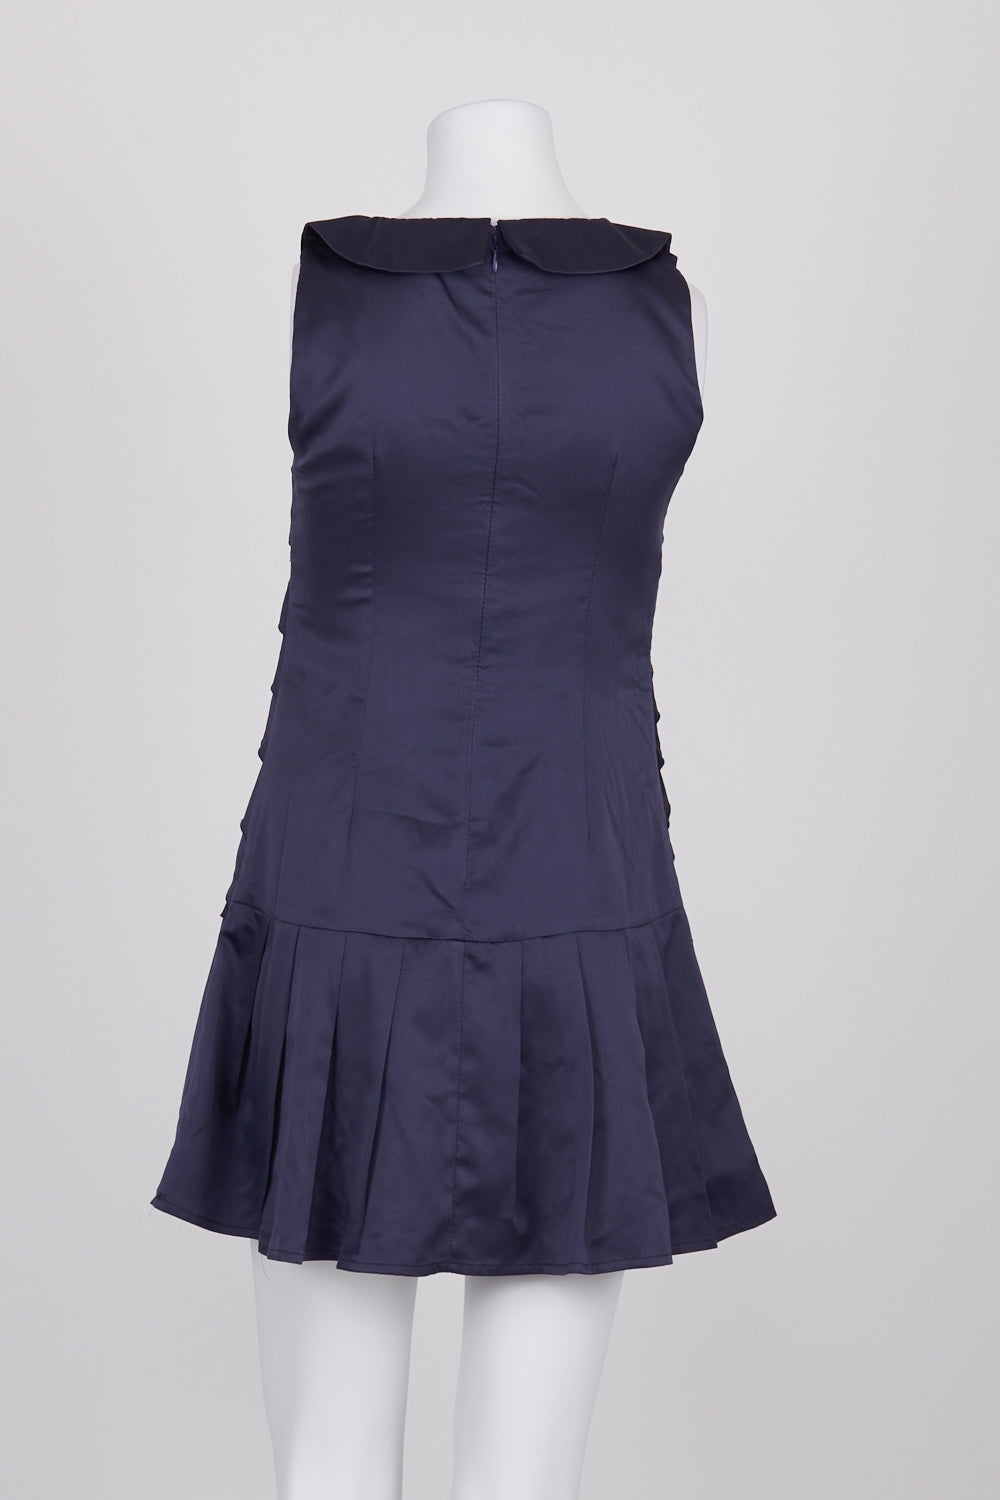 Esley Purple Layered Dress S